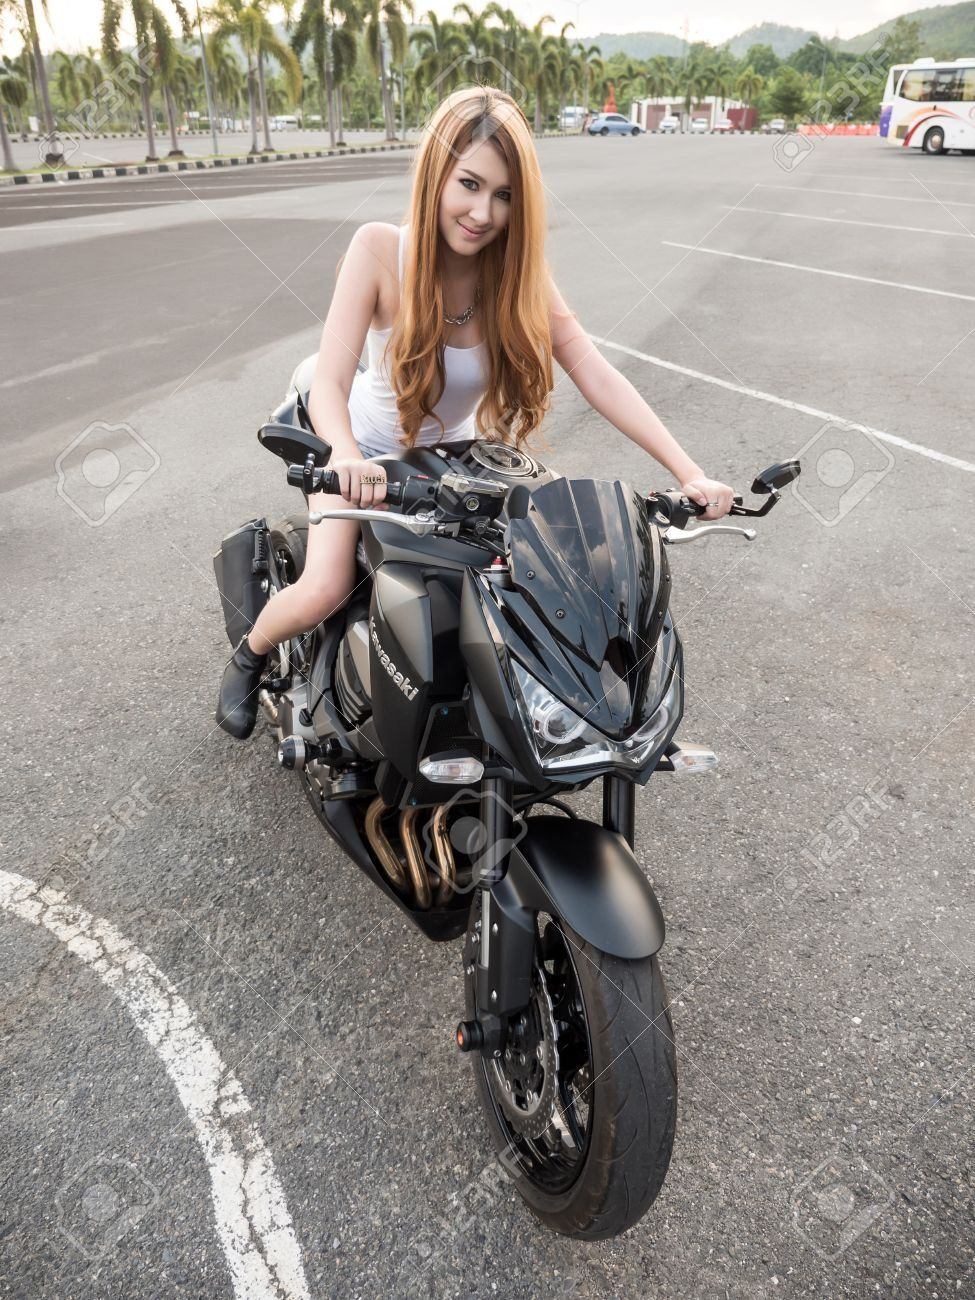 best of Sportbike Nude girl on